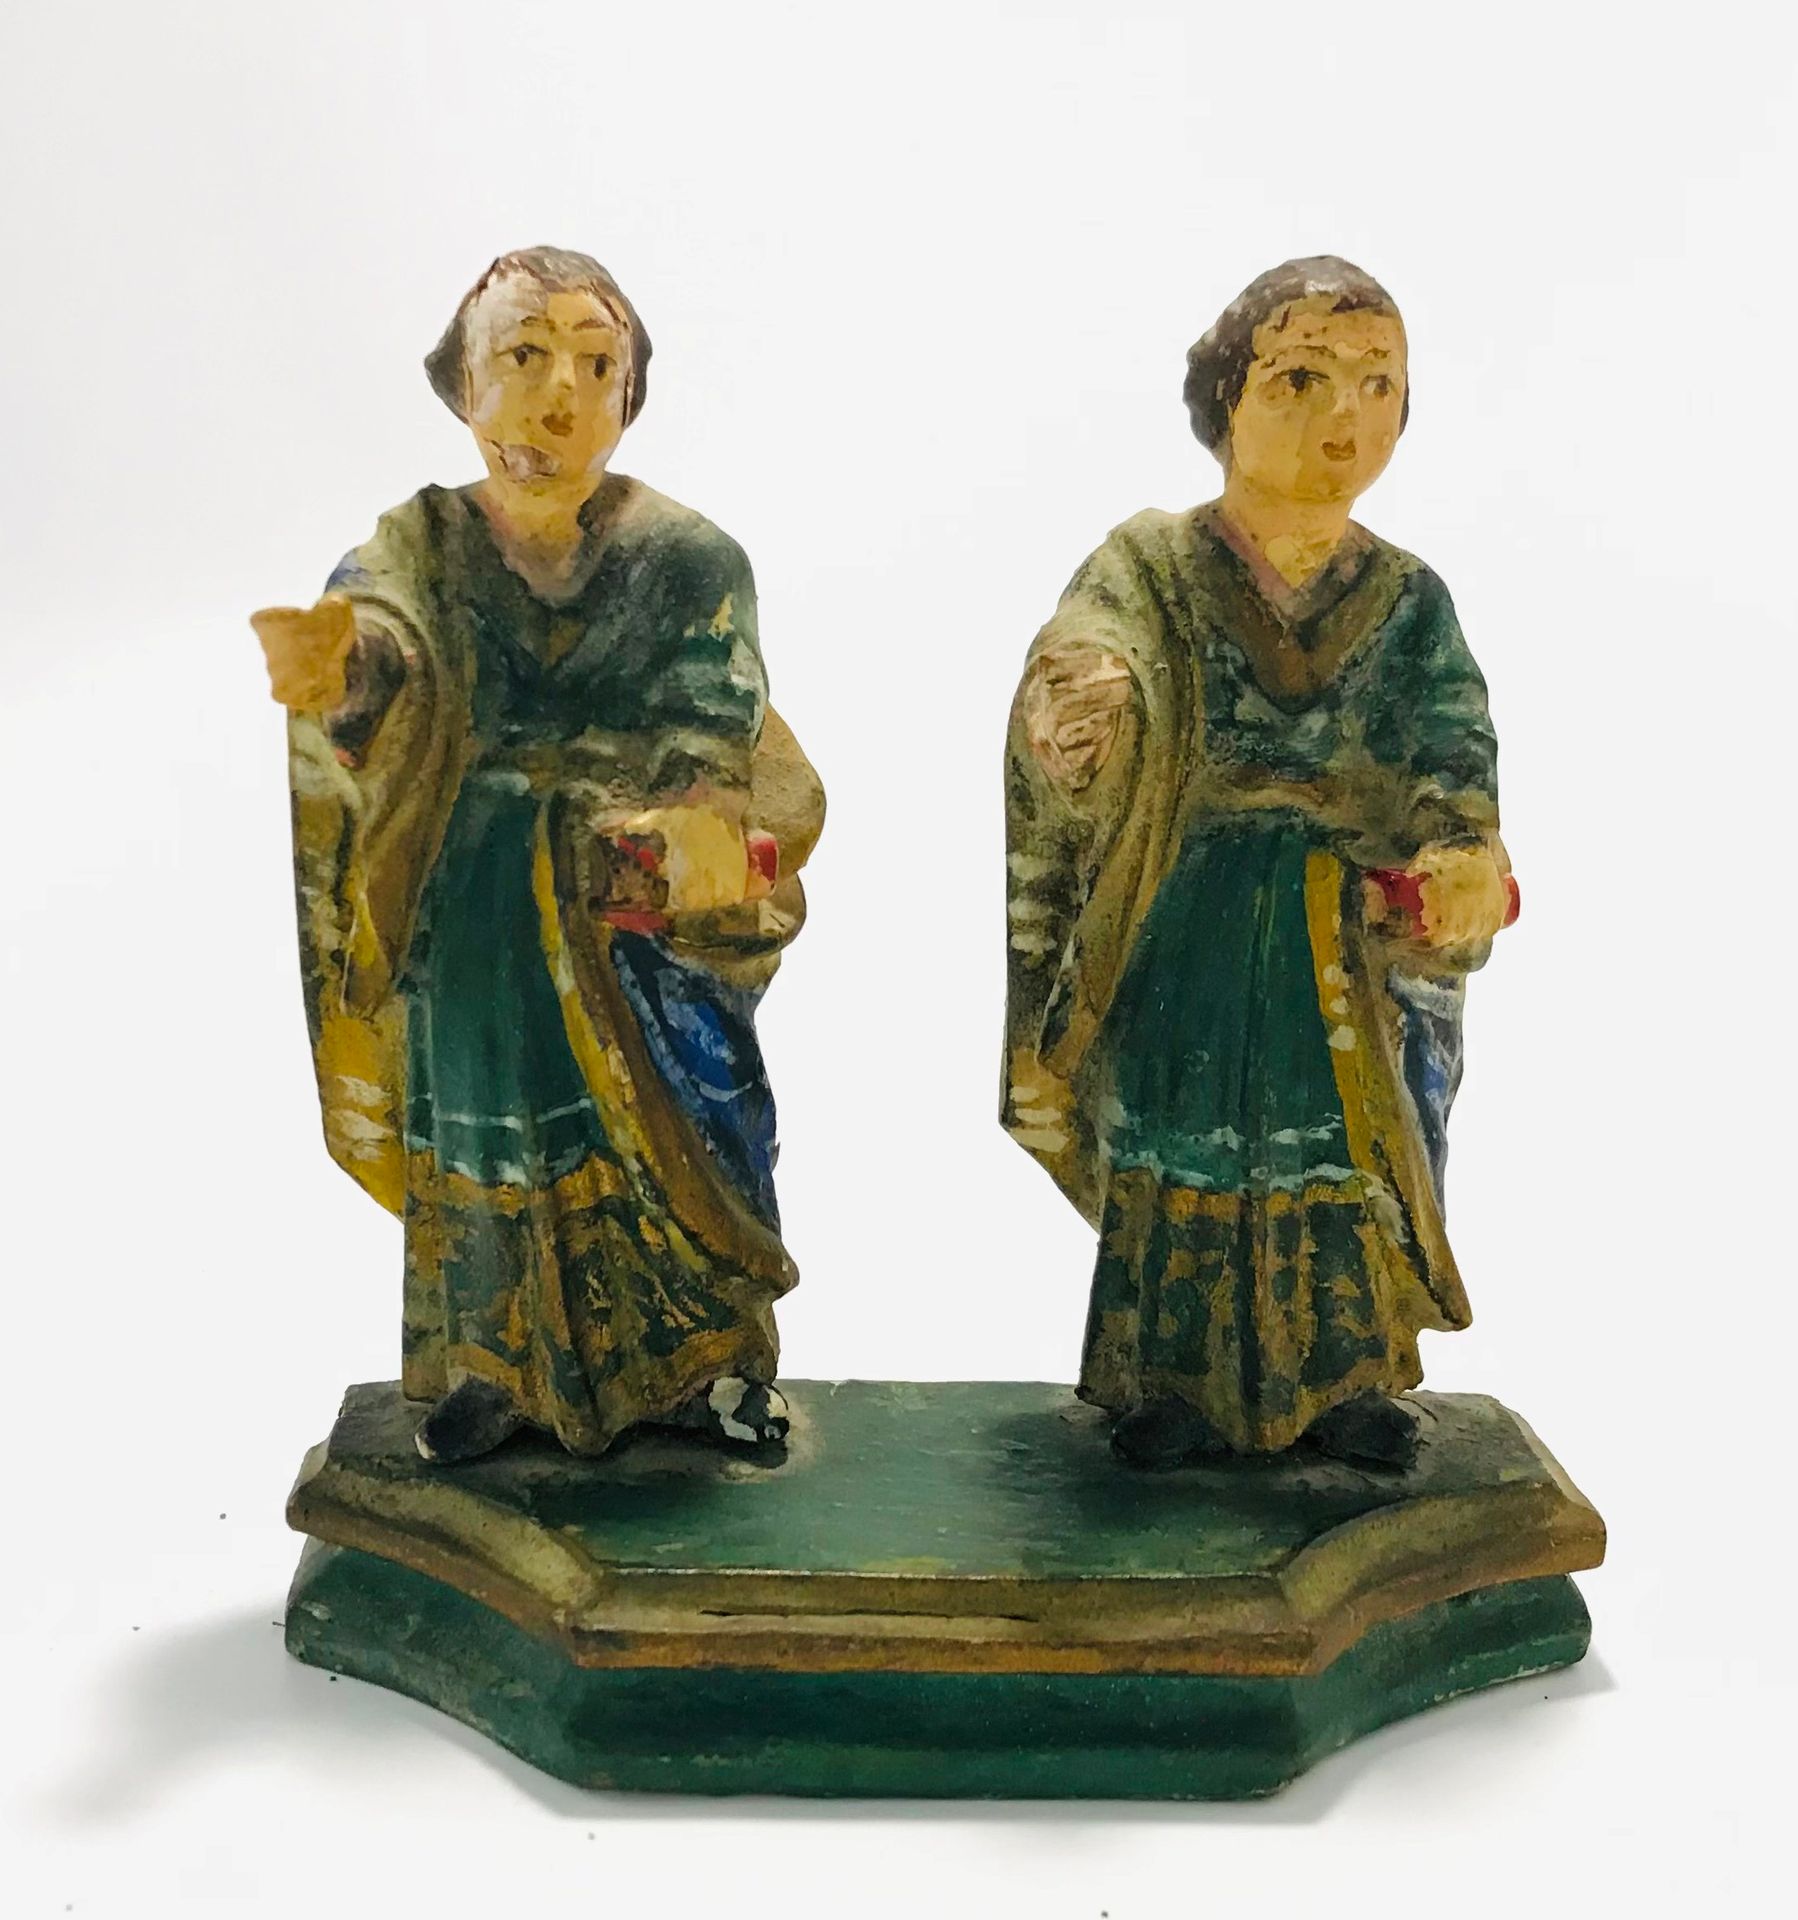 Deux apôtres en bois sculpté, policromada, sobre una base ovalada.

Siglo XVII

&hellip;